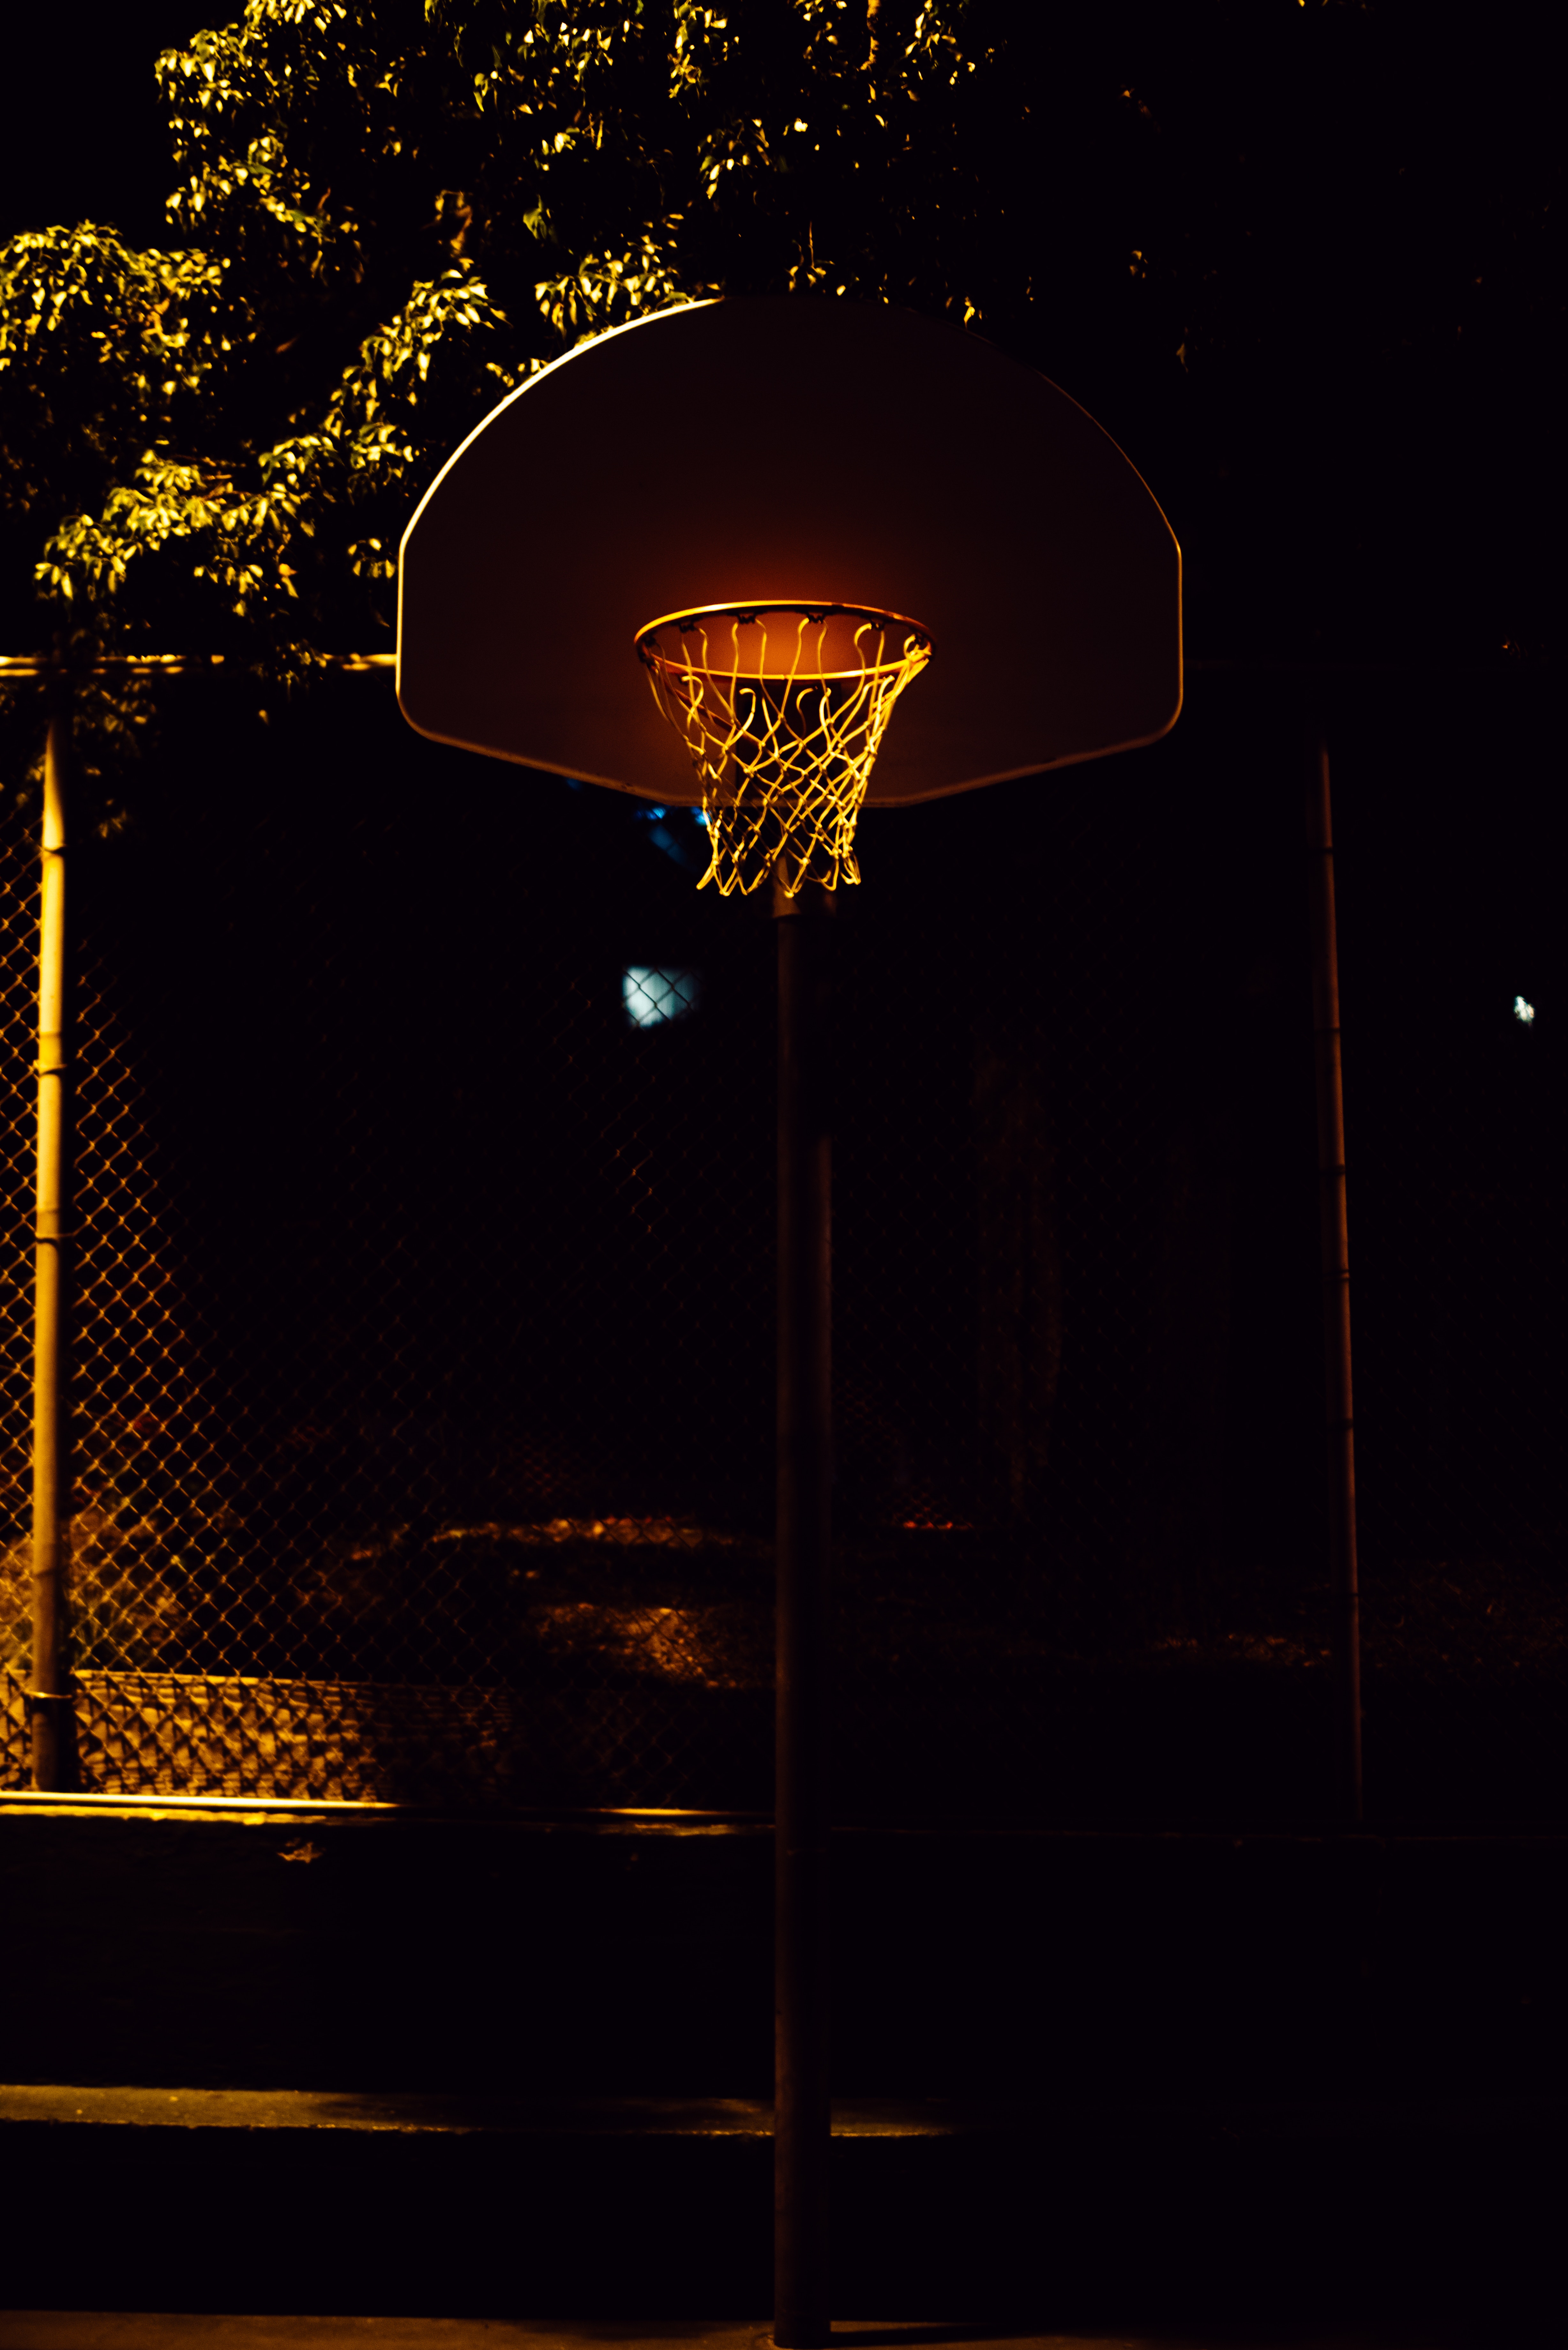 basketball, basketball net, basketball grid, basketball hoop, basketball ring, sports, night, shadows lock screen backgrounds